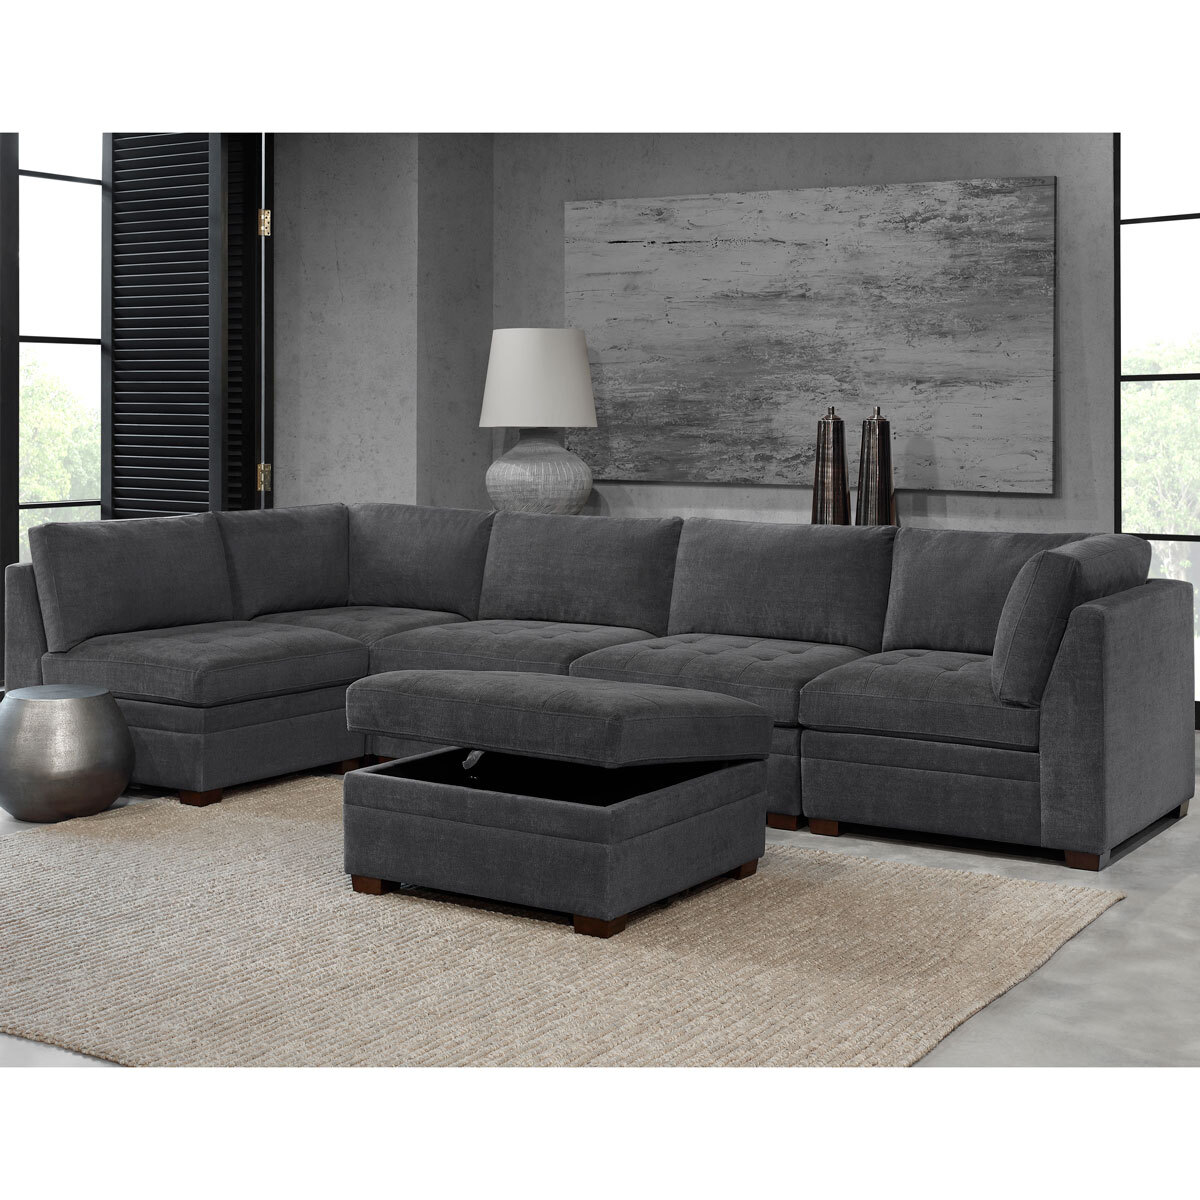 thomasville tisdale dark grey 6 piece modular fabric sofa costco uk